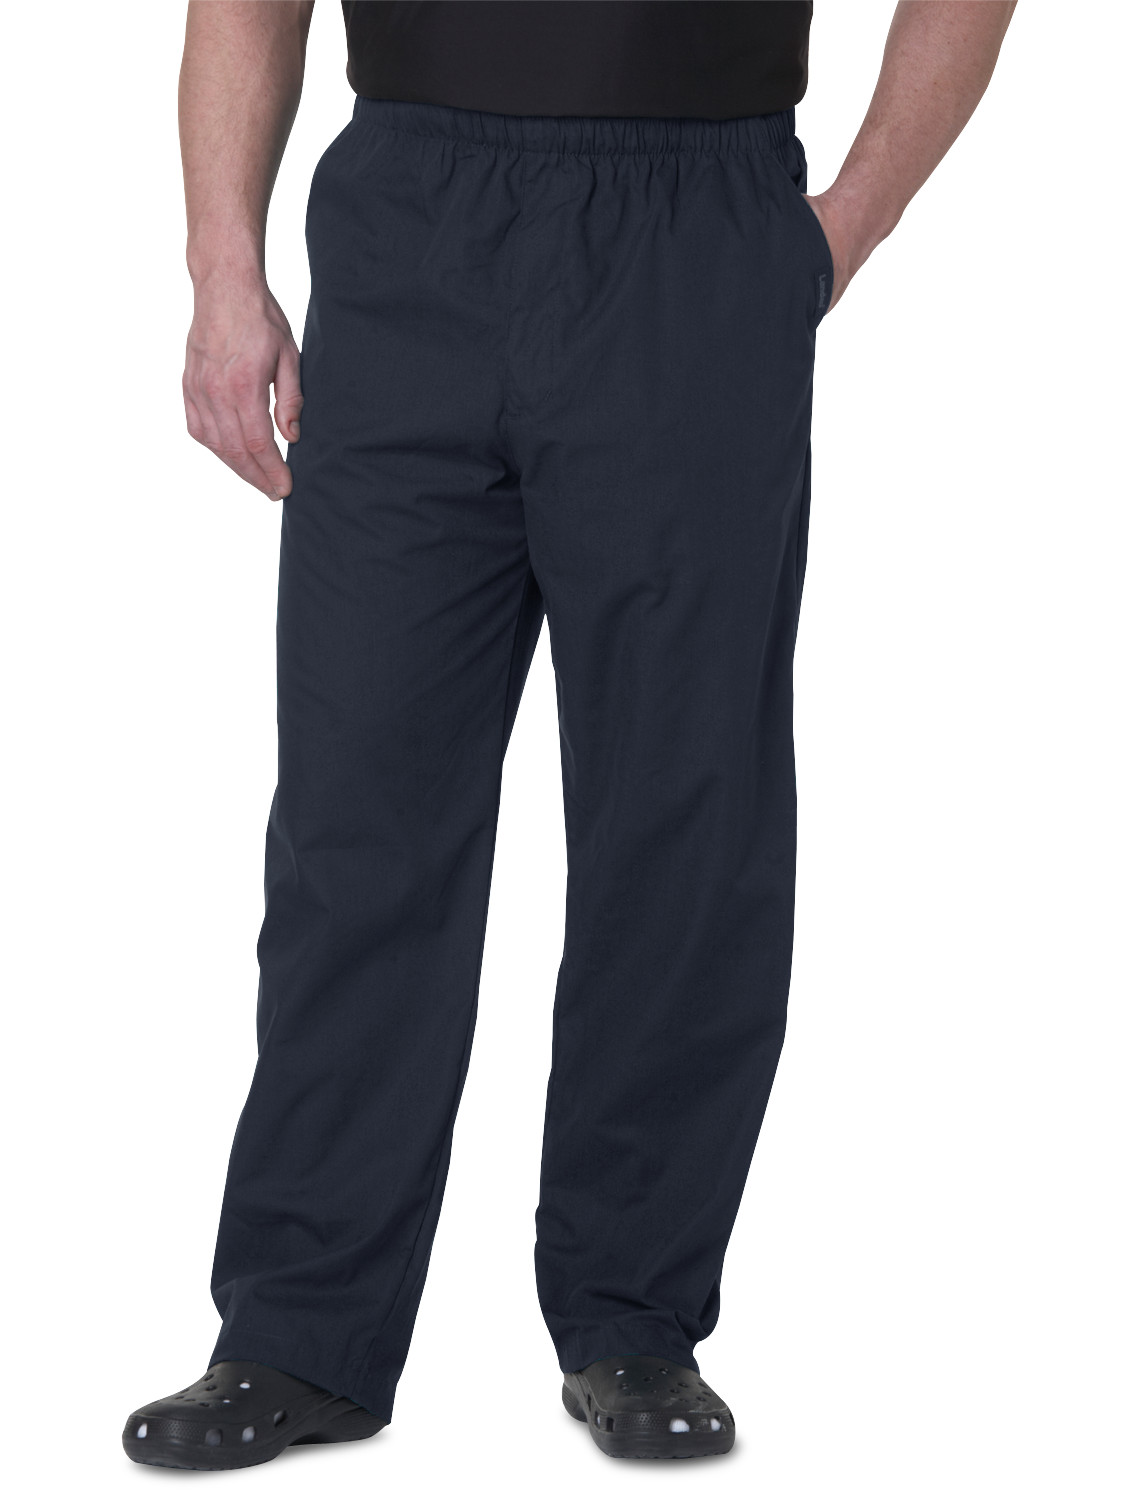 Landau for Men Scrub Pants Casual Male XL Big & Tall | eBay